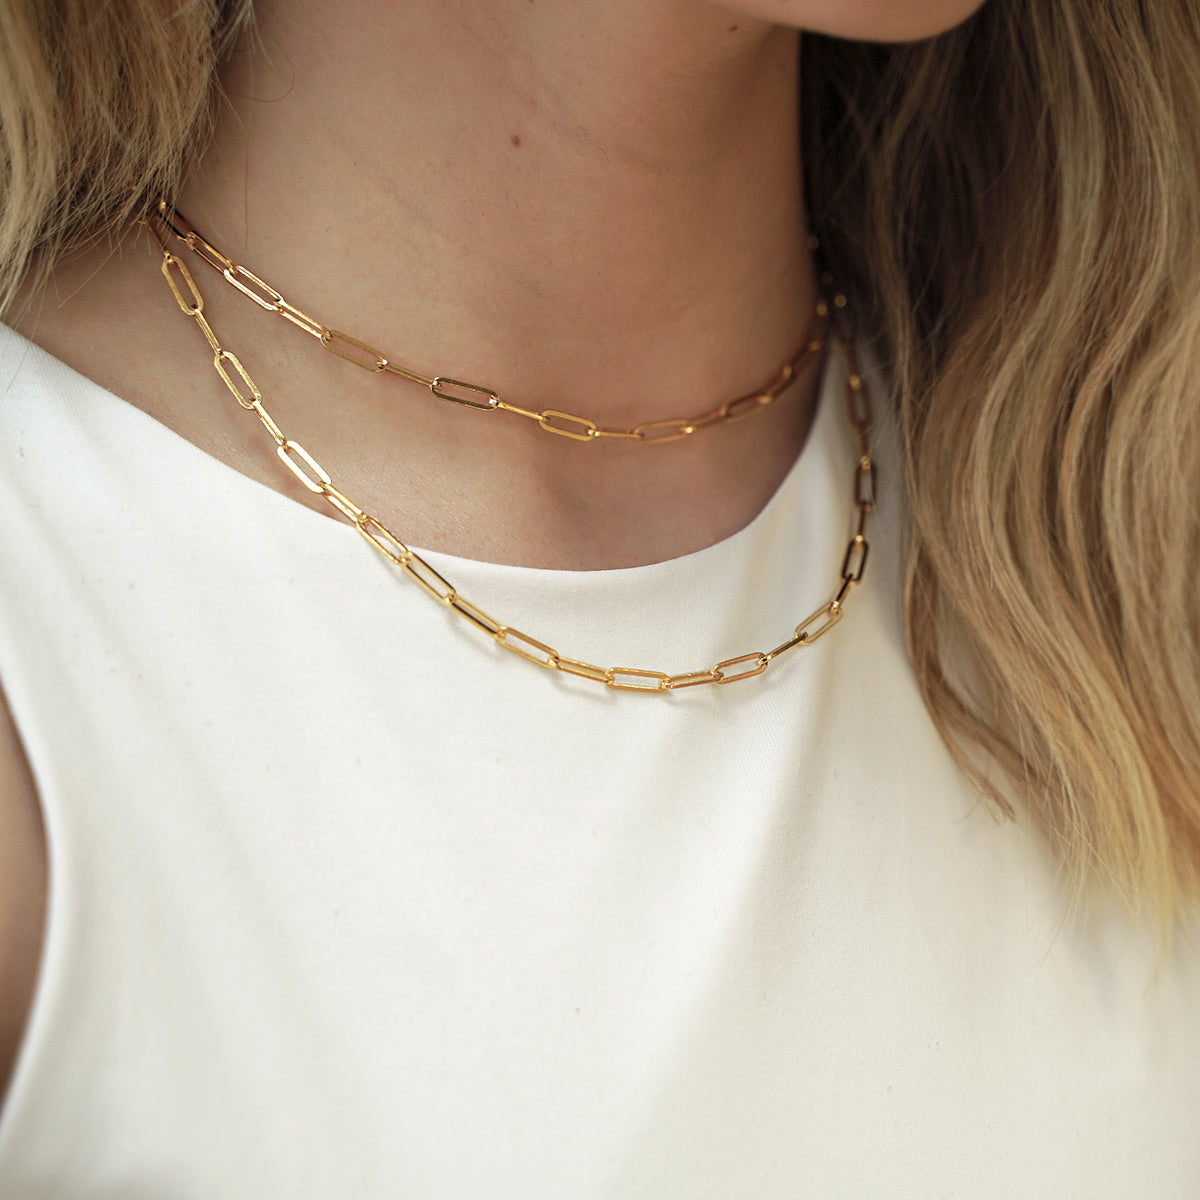 Medium Link Necklace, Gold Vermeil